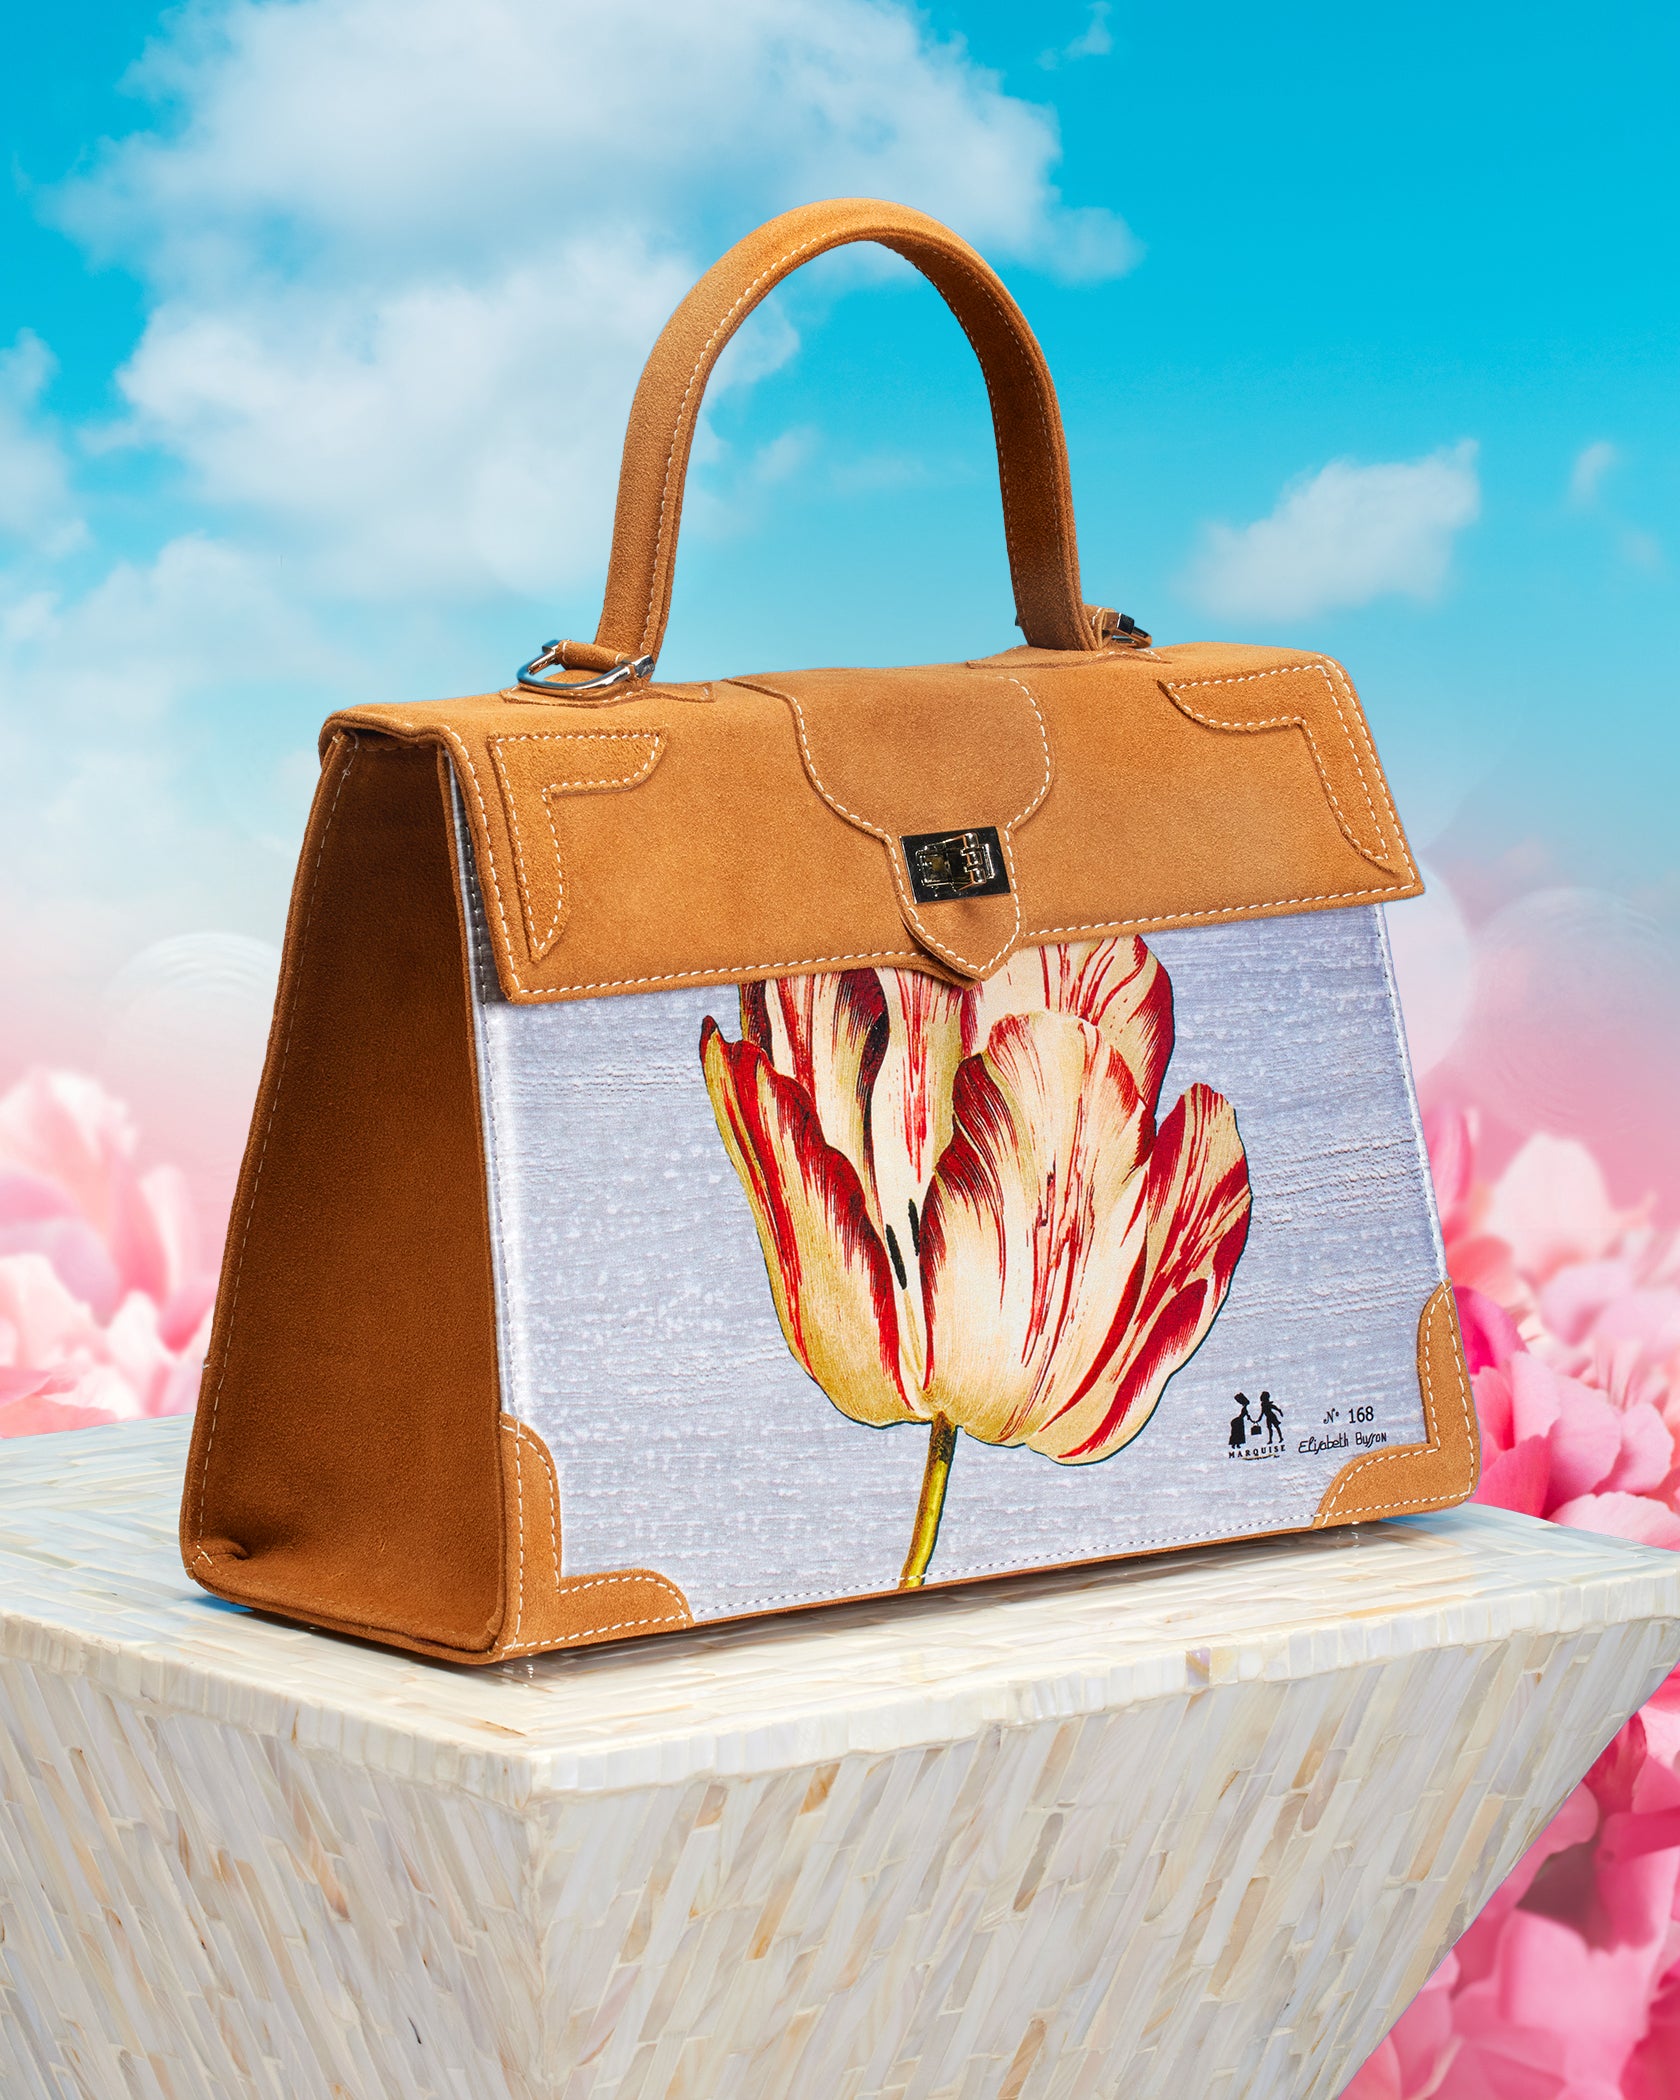 Marquise Paris Tulipe Top Handle Shoulder Bag in Honey-Side View